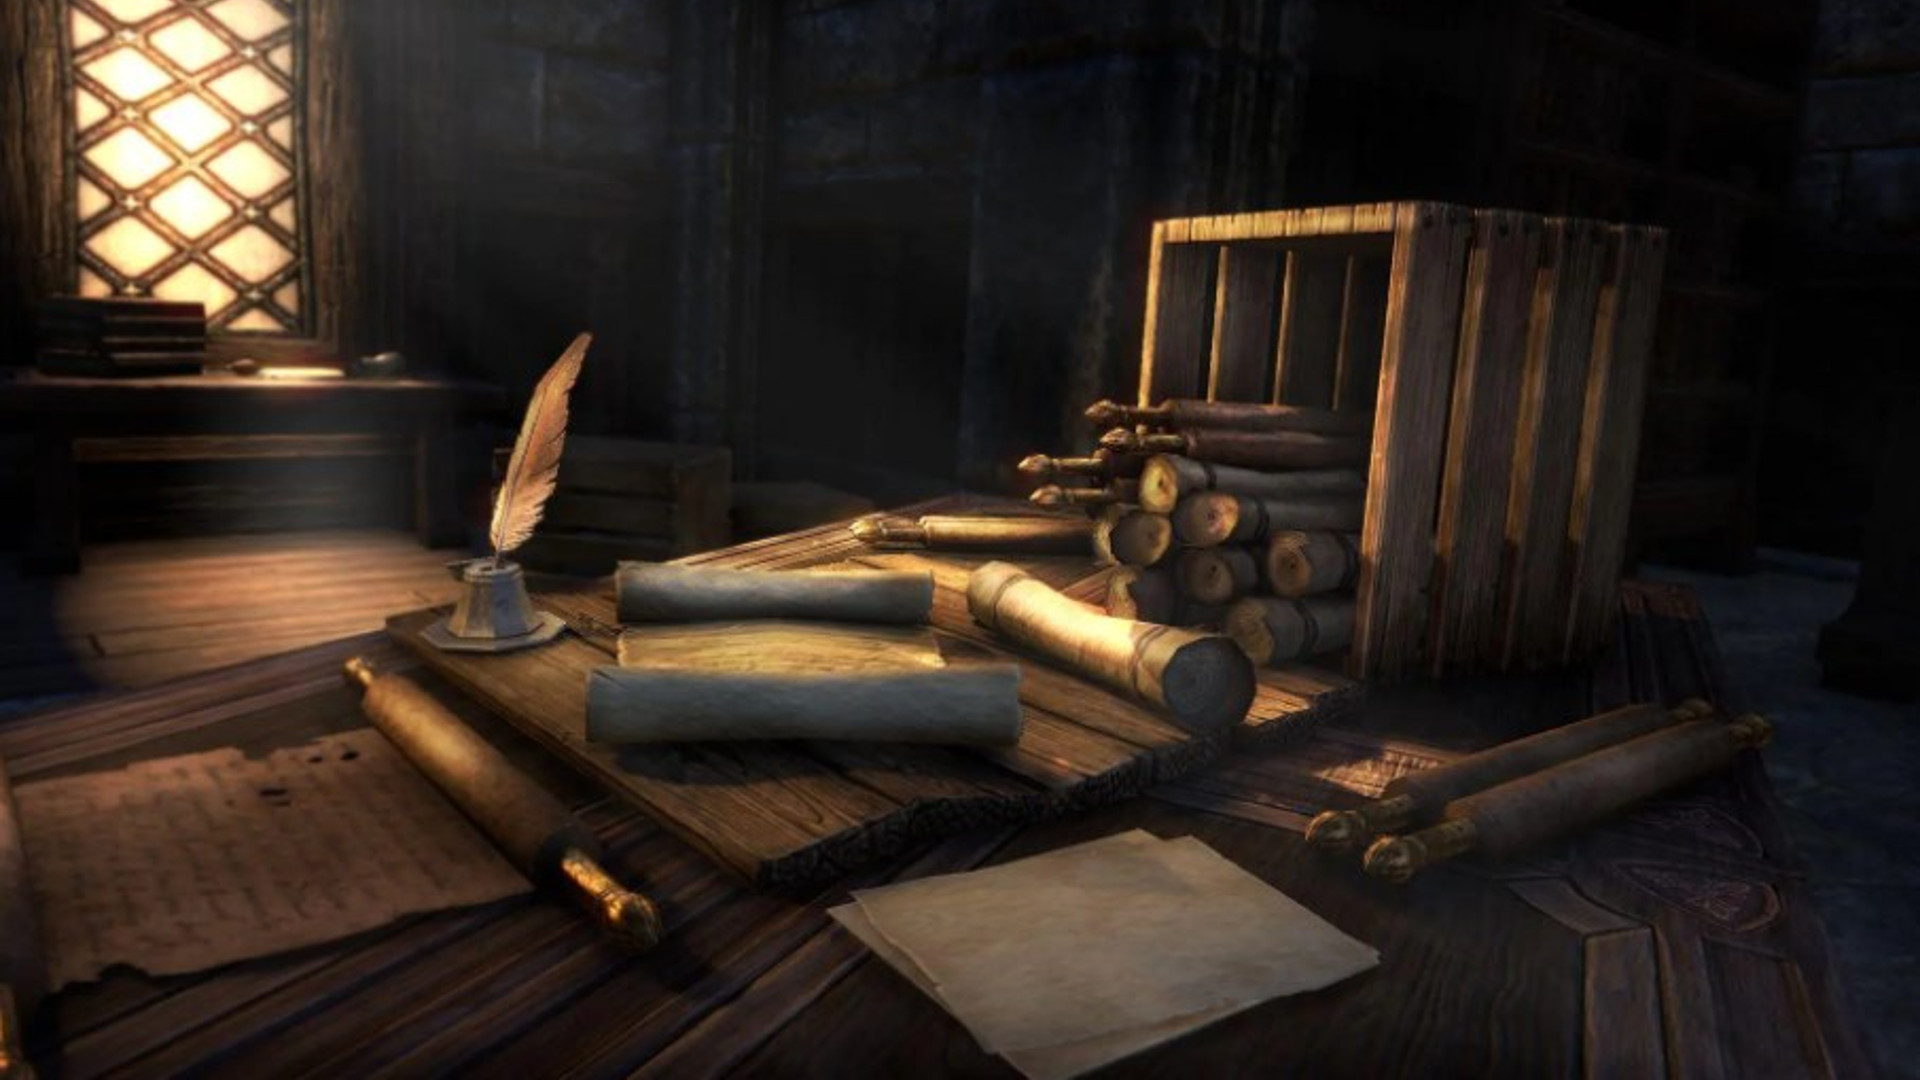 New Elder Scrolls Online Update Allows Players to Earn Loot Box